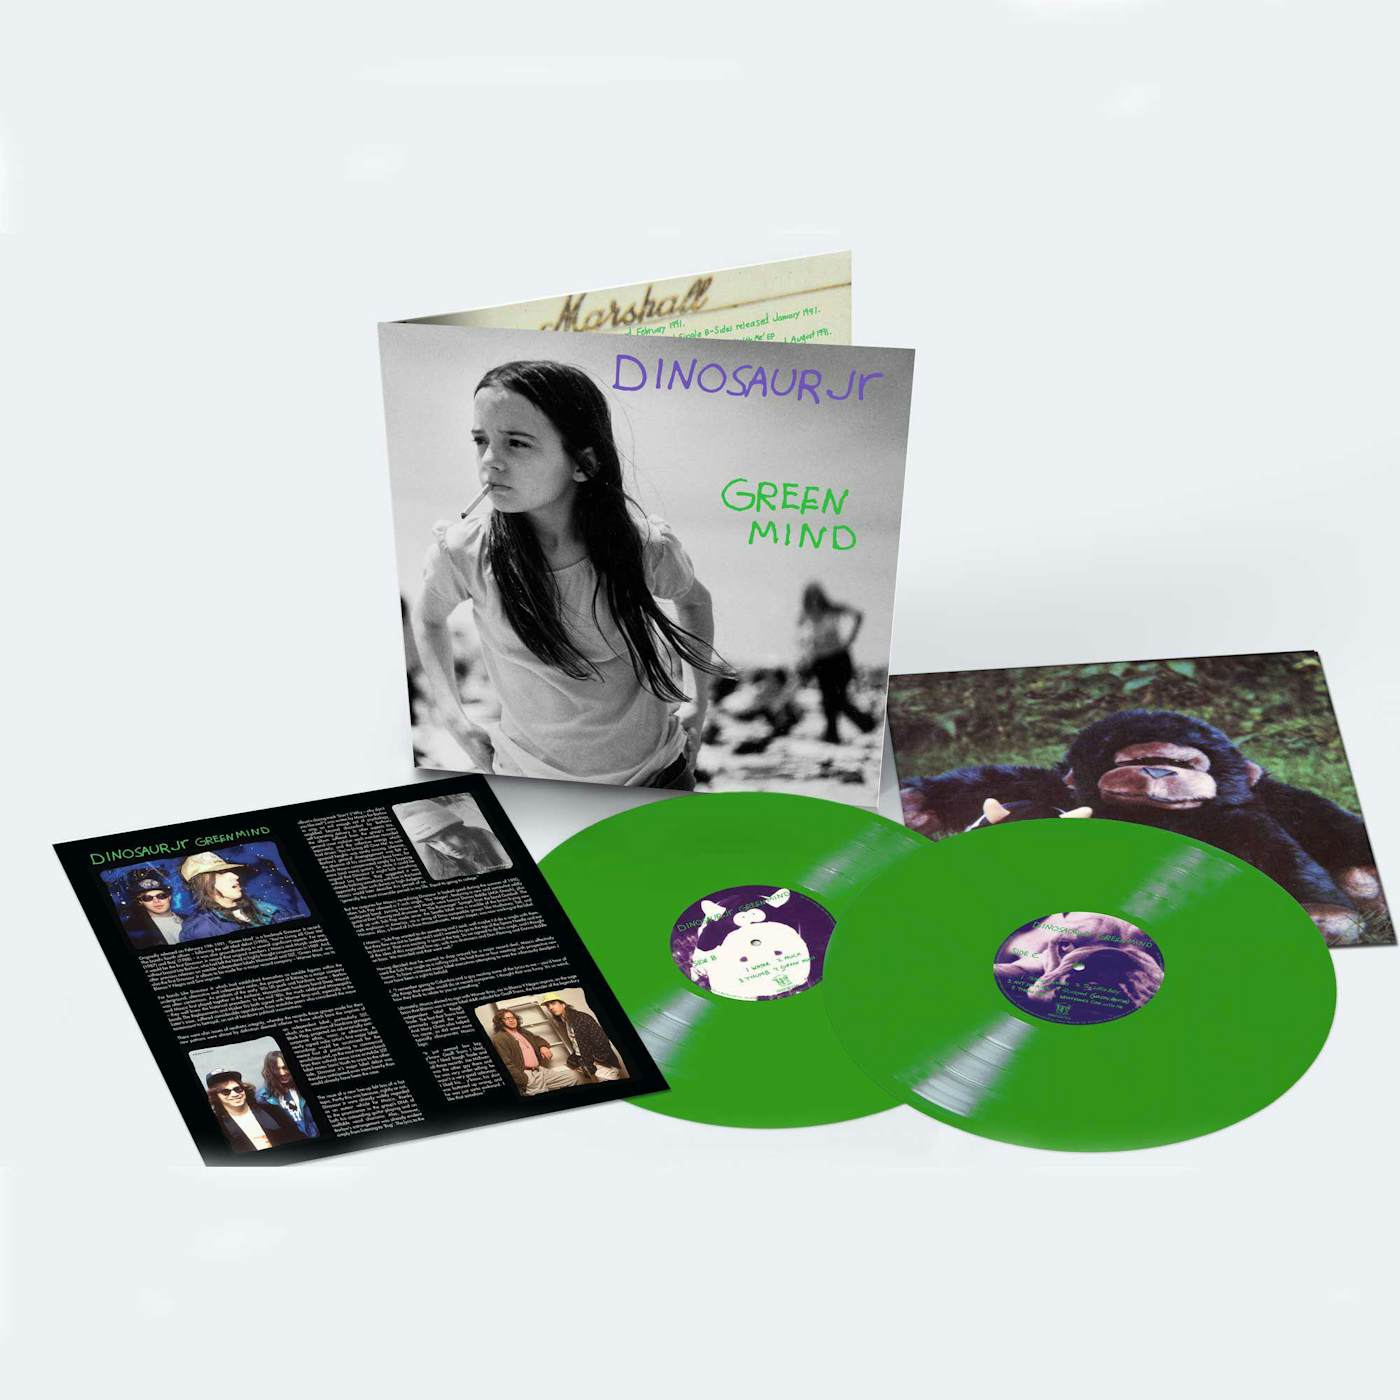 Dinosaur Jr. - Green Mind (2LP/Green/Deluxe Expanded Edition/Double Gatefold) Vinyl